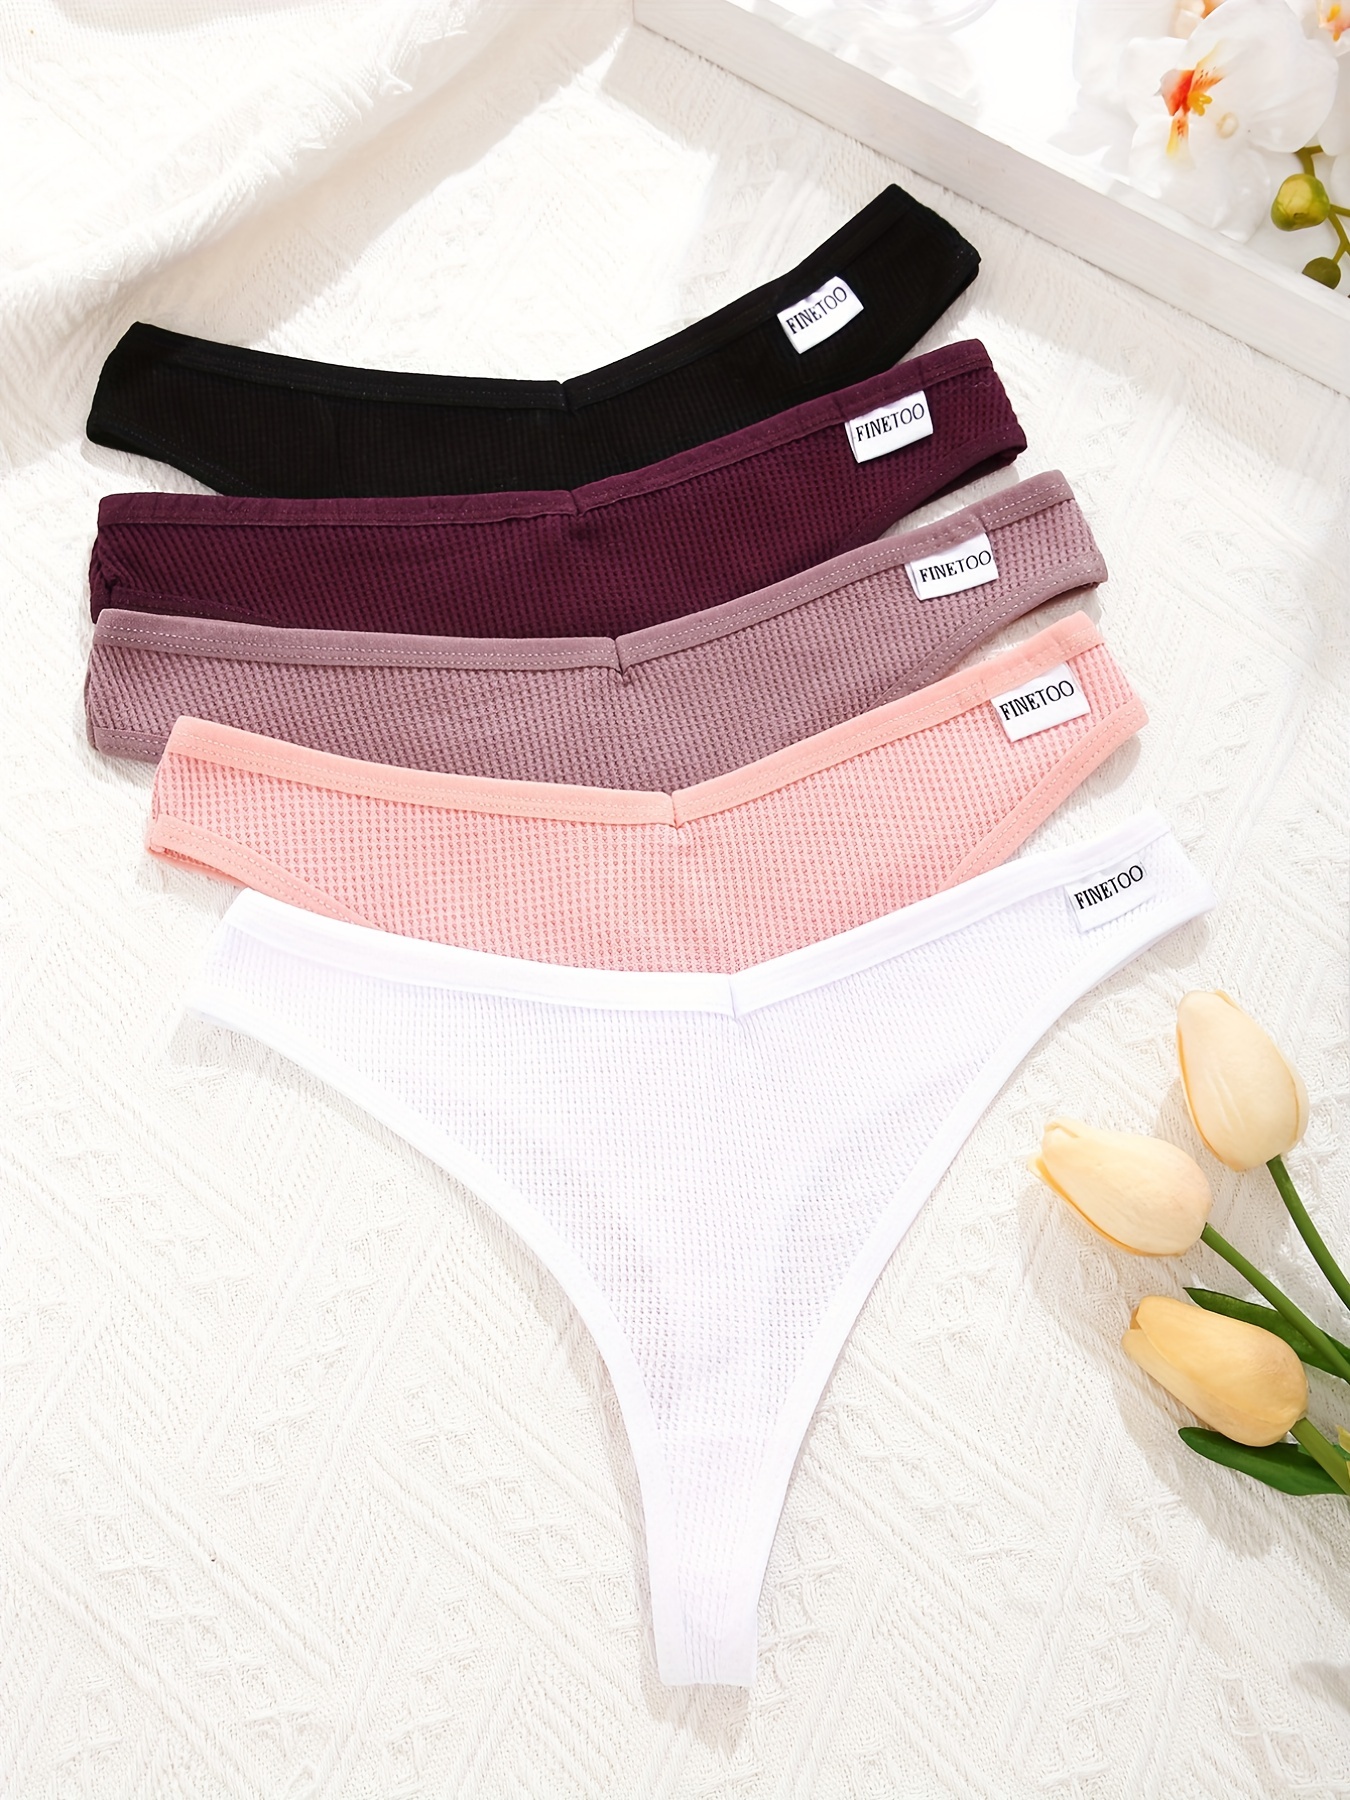 FINETOO Women Seamless Sexy Cotton Underwear Rainbow Color